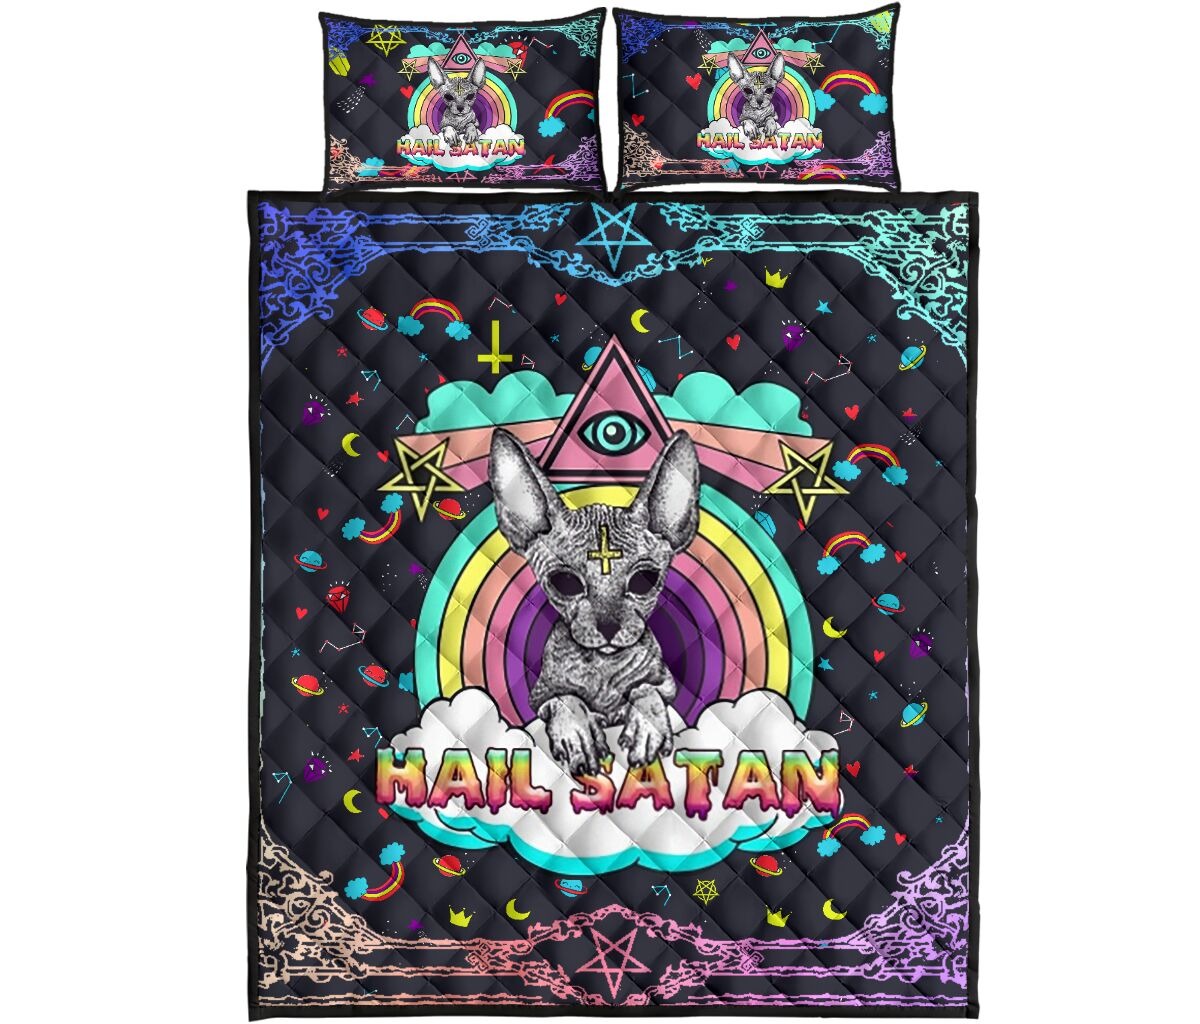 Sphyn hail satan quilt bedding set4